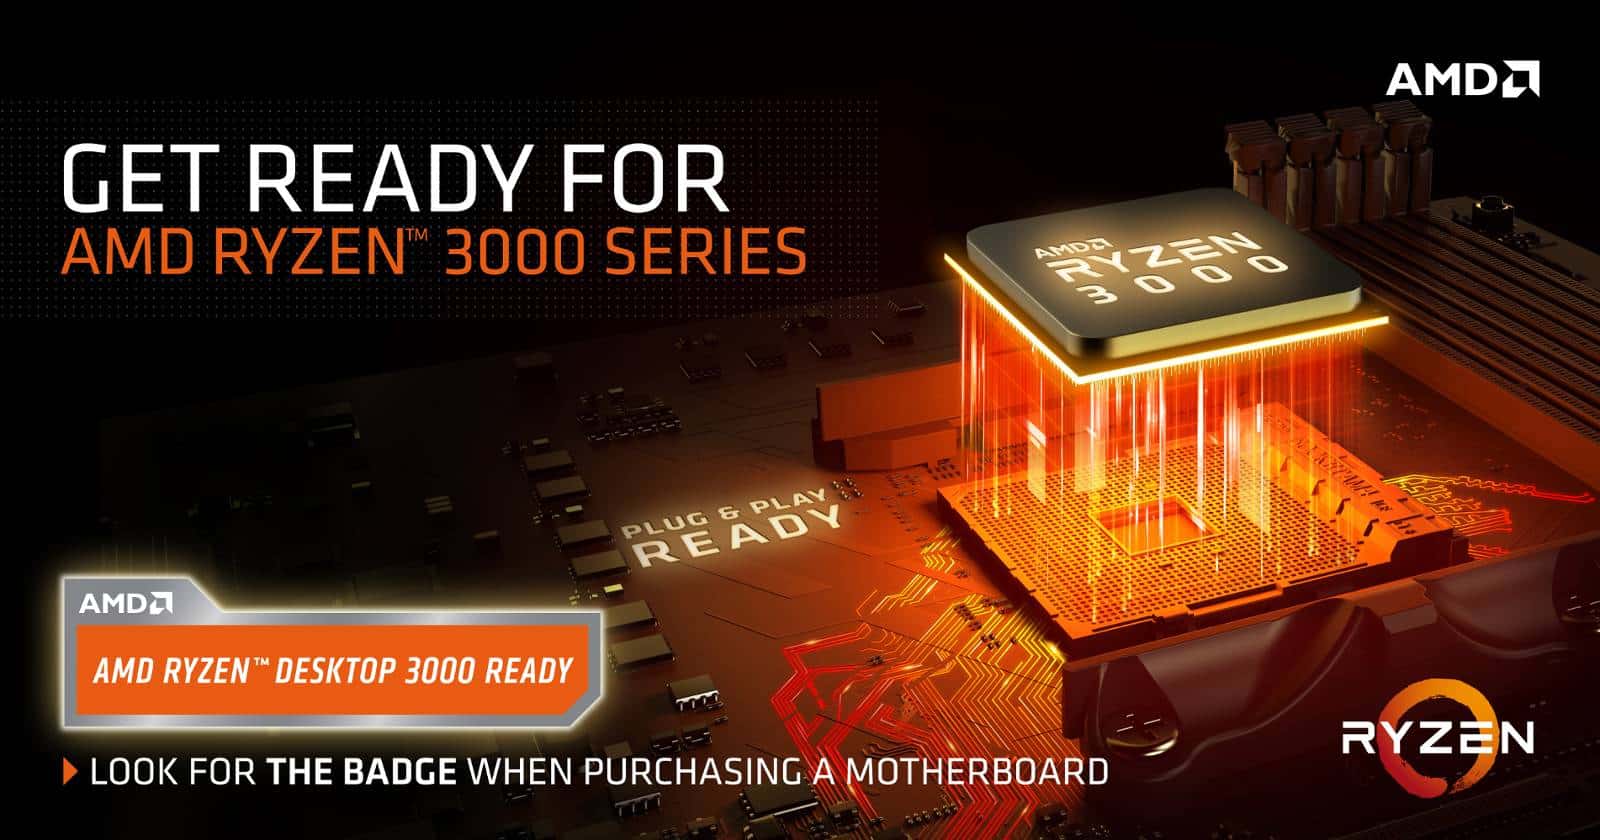 AMD تعلن عن معالجات أقوى وبسعر أقل من معالجات إنتل - البوابة العربية للأخبار التقنية